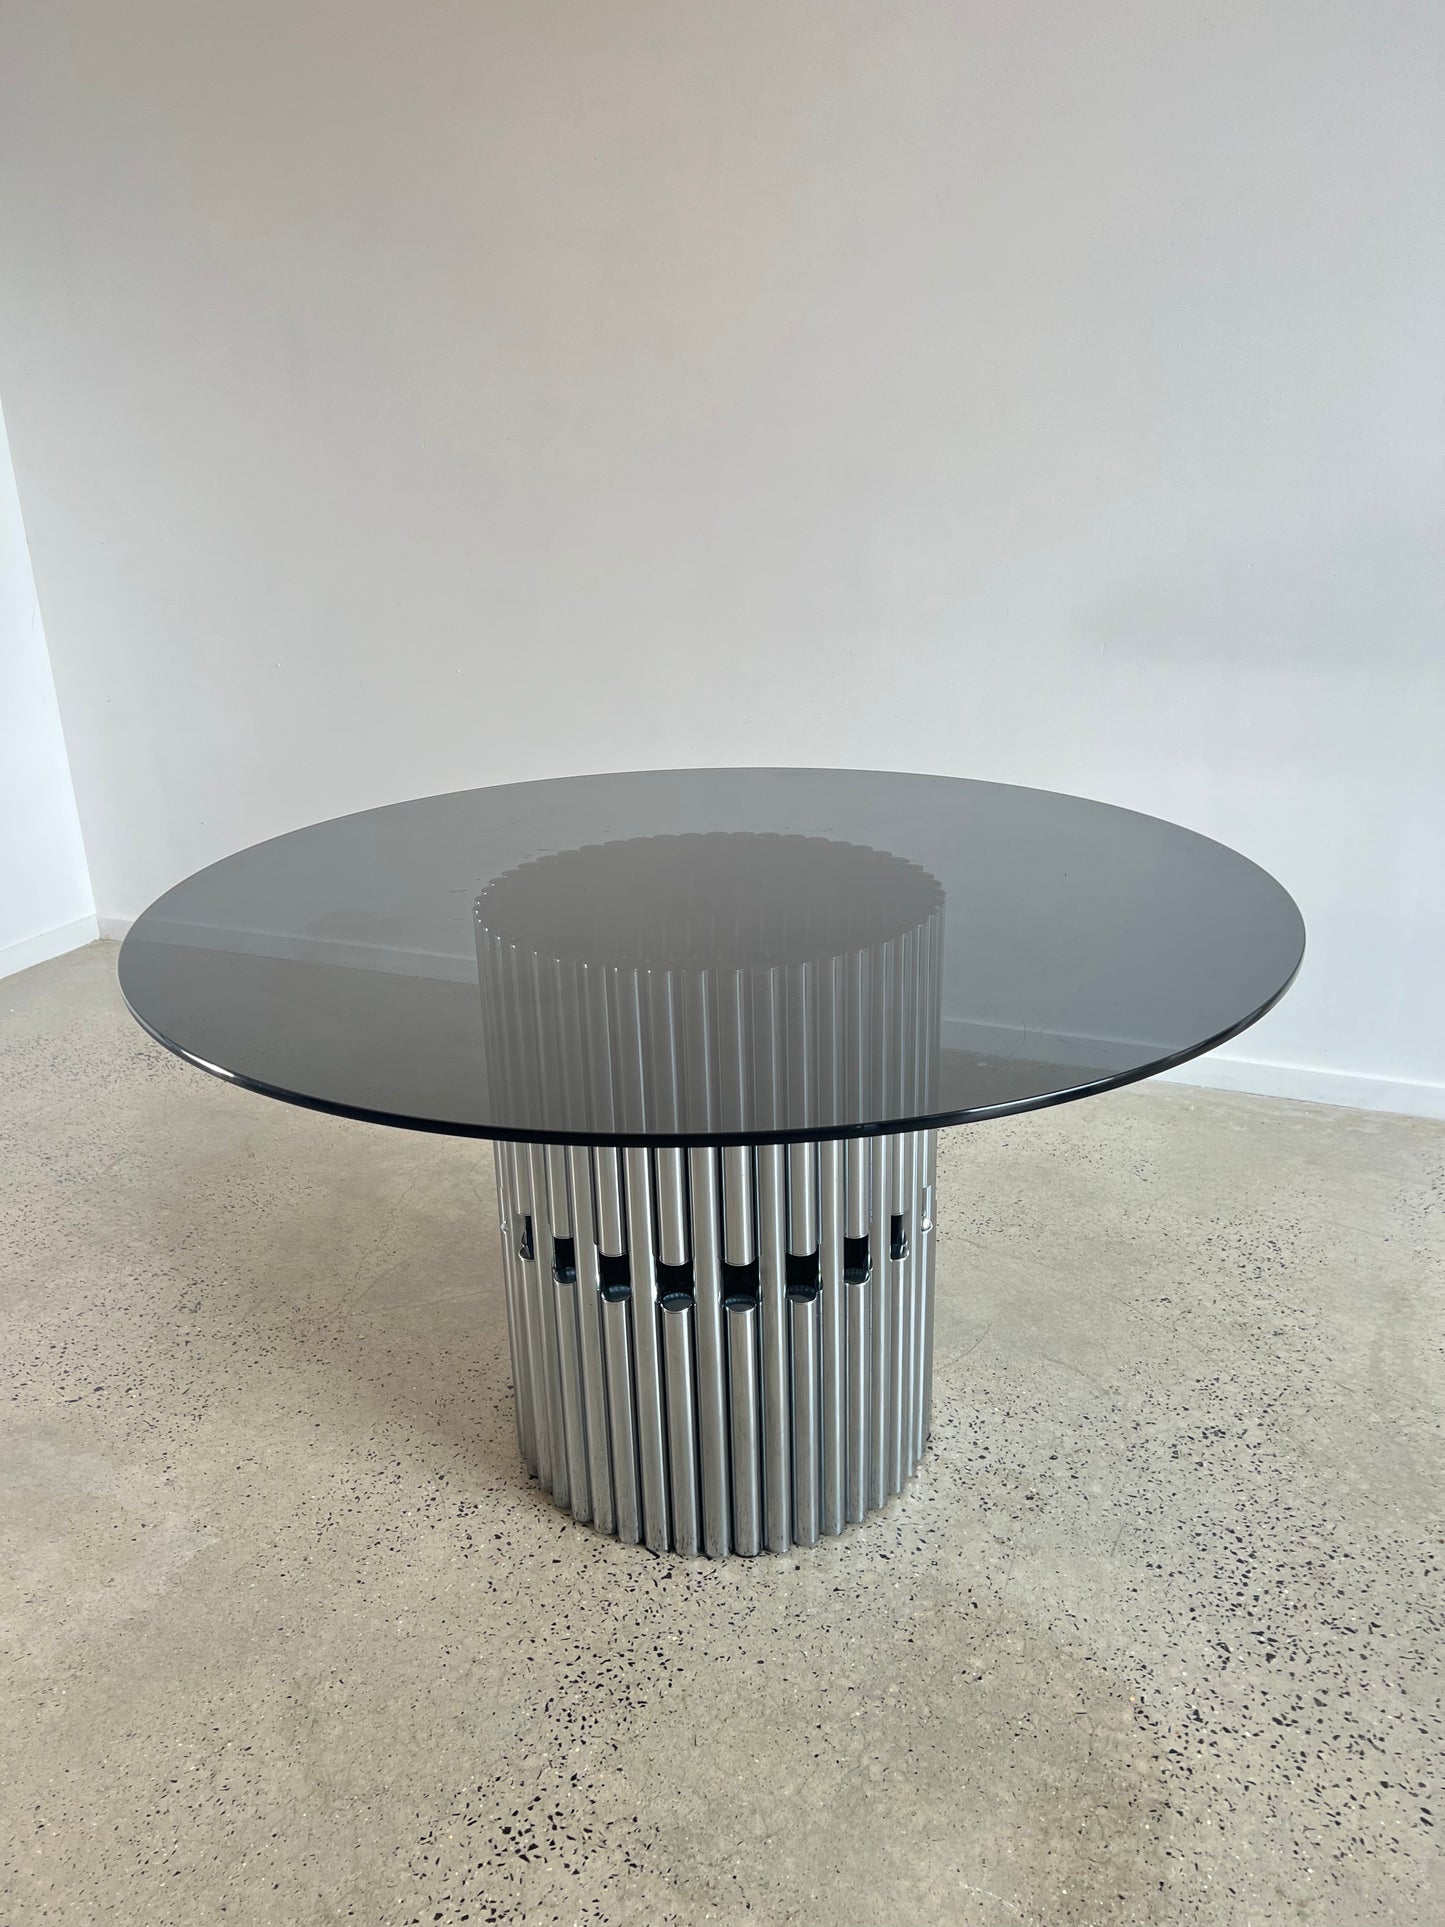 Gastone Rinaldi Chromed Tubular and Smoked Glass Dining Table, 1970